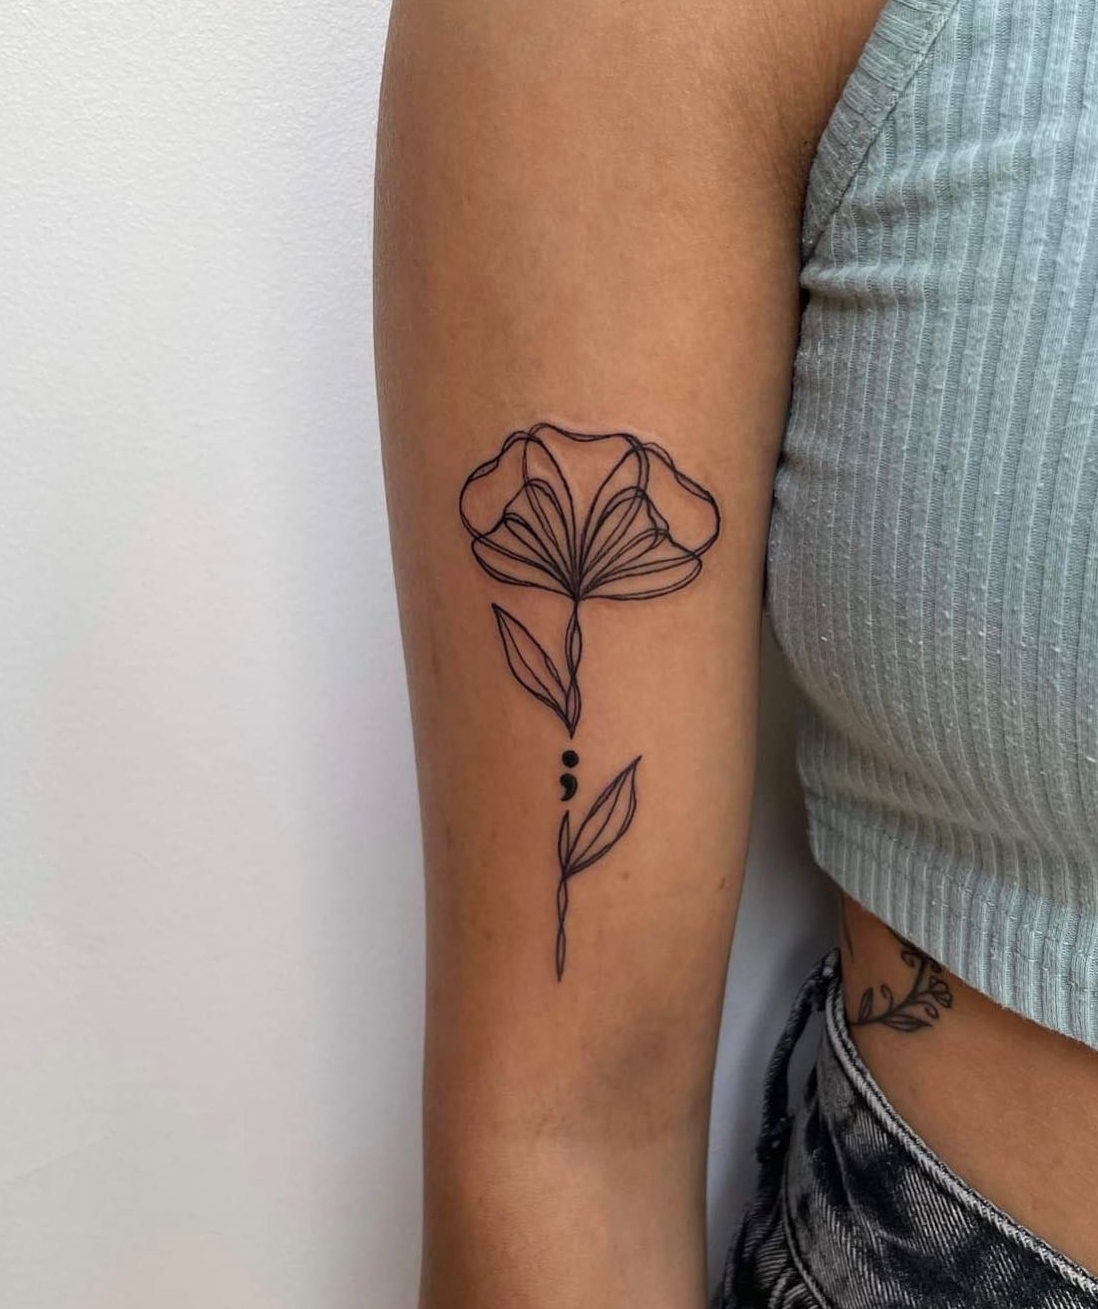 Floral Semicolon Tattoo on Arm